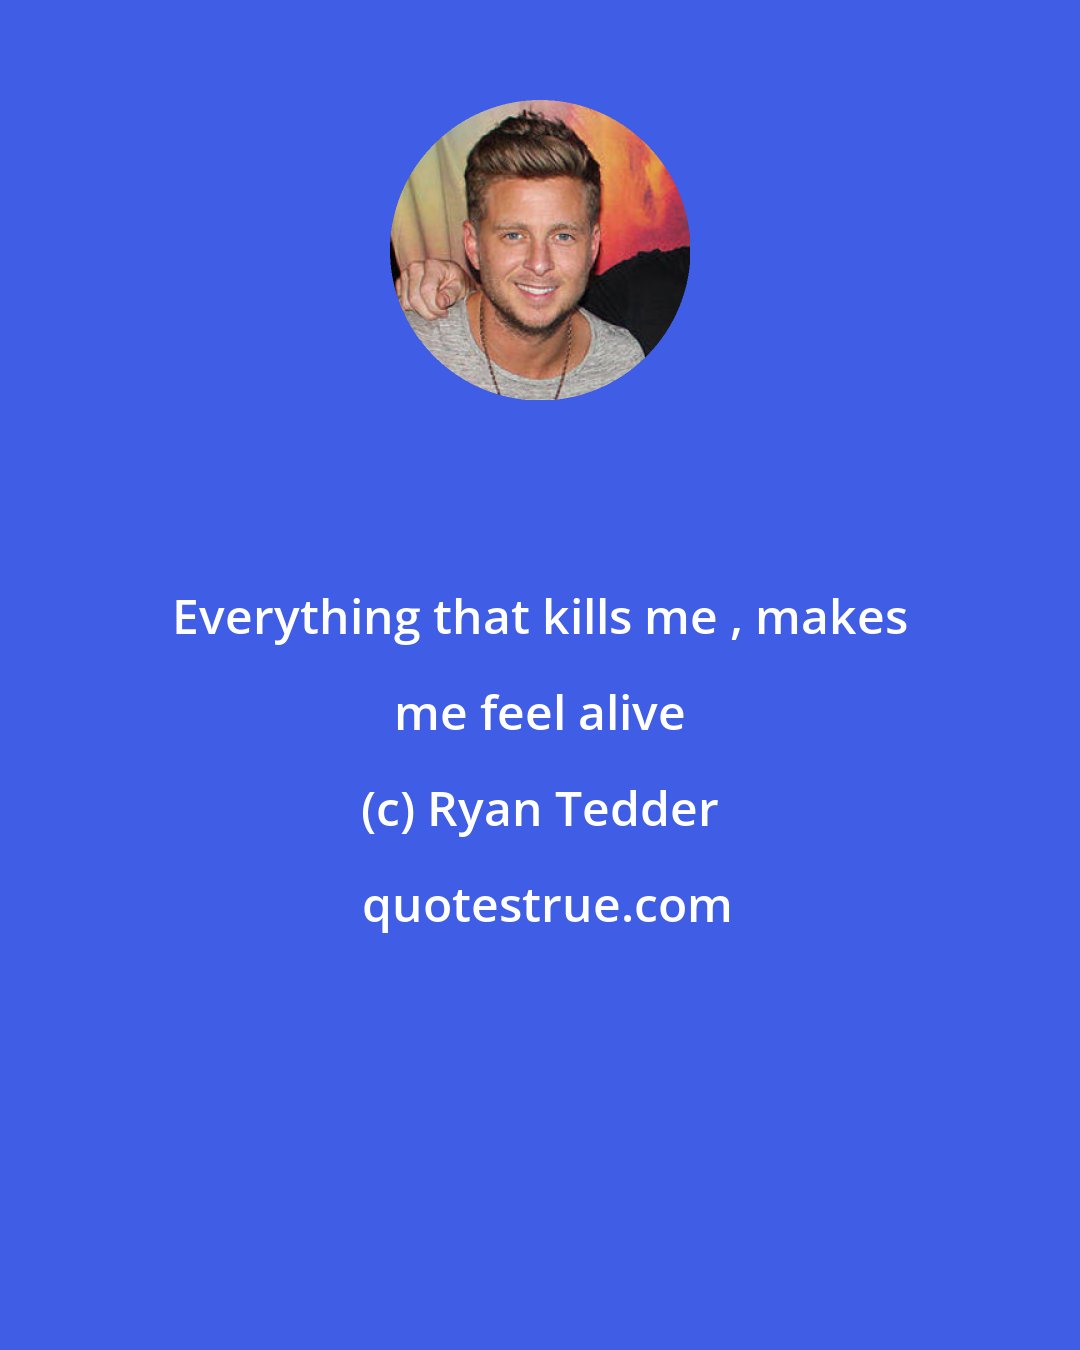 Ryan Tedder: Everything that kills me , makes me feel alive